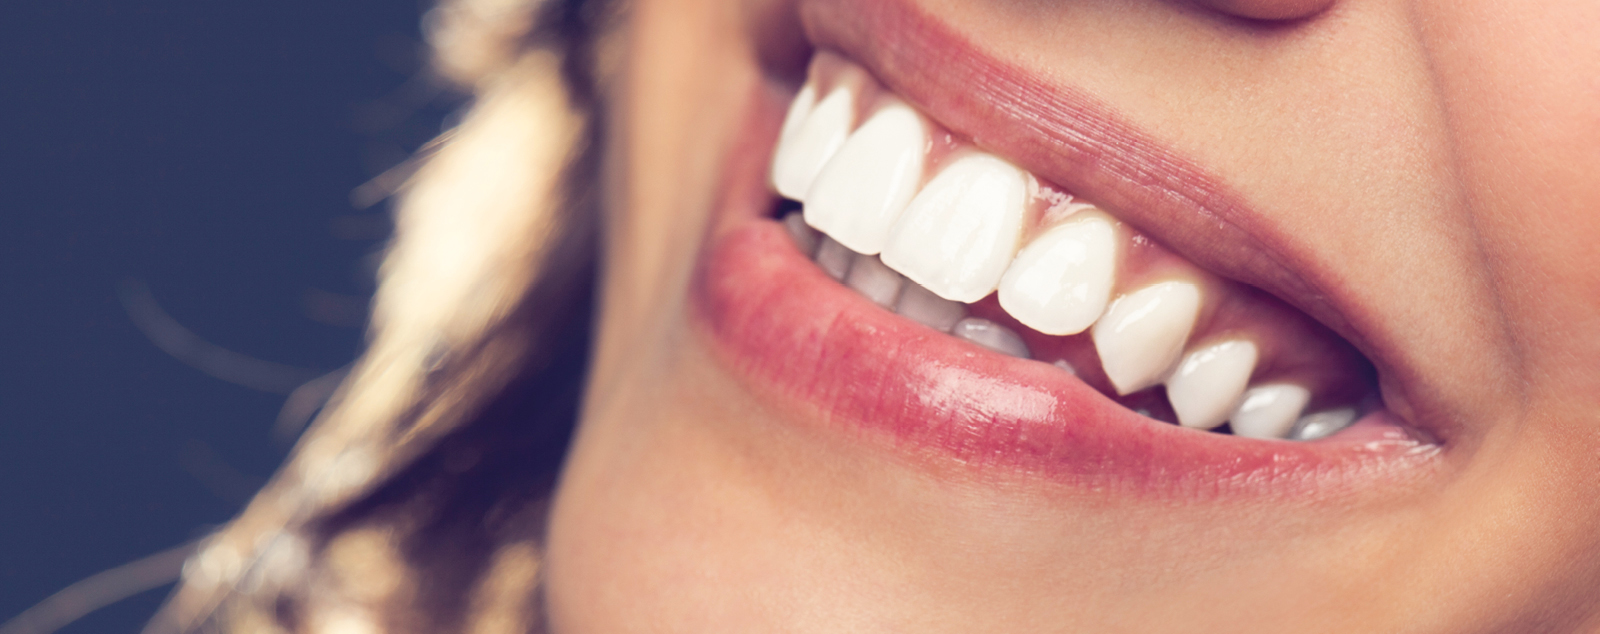 Teeth Straightening/Invisible Orthodontics